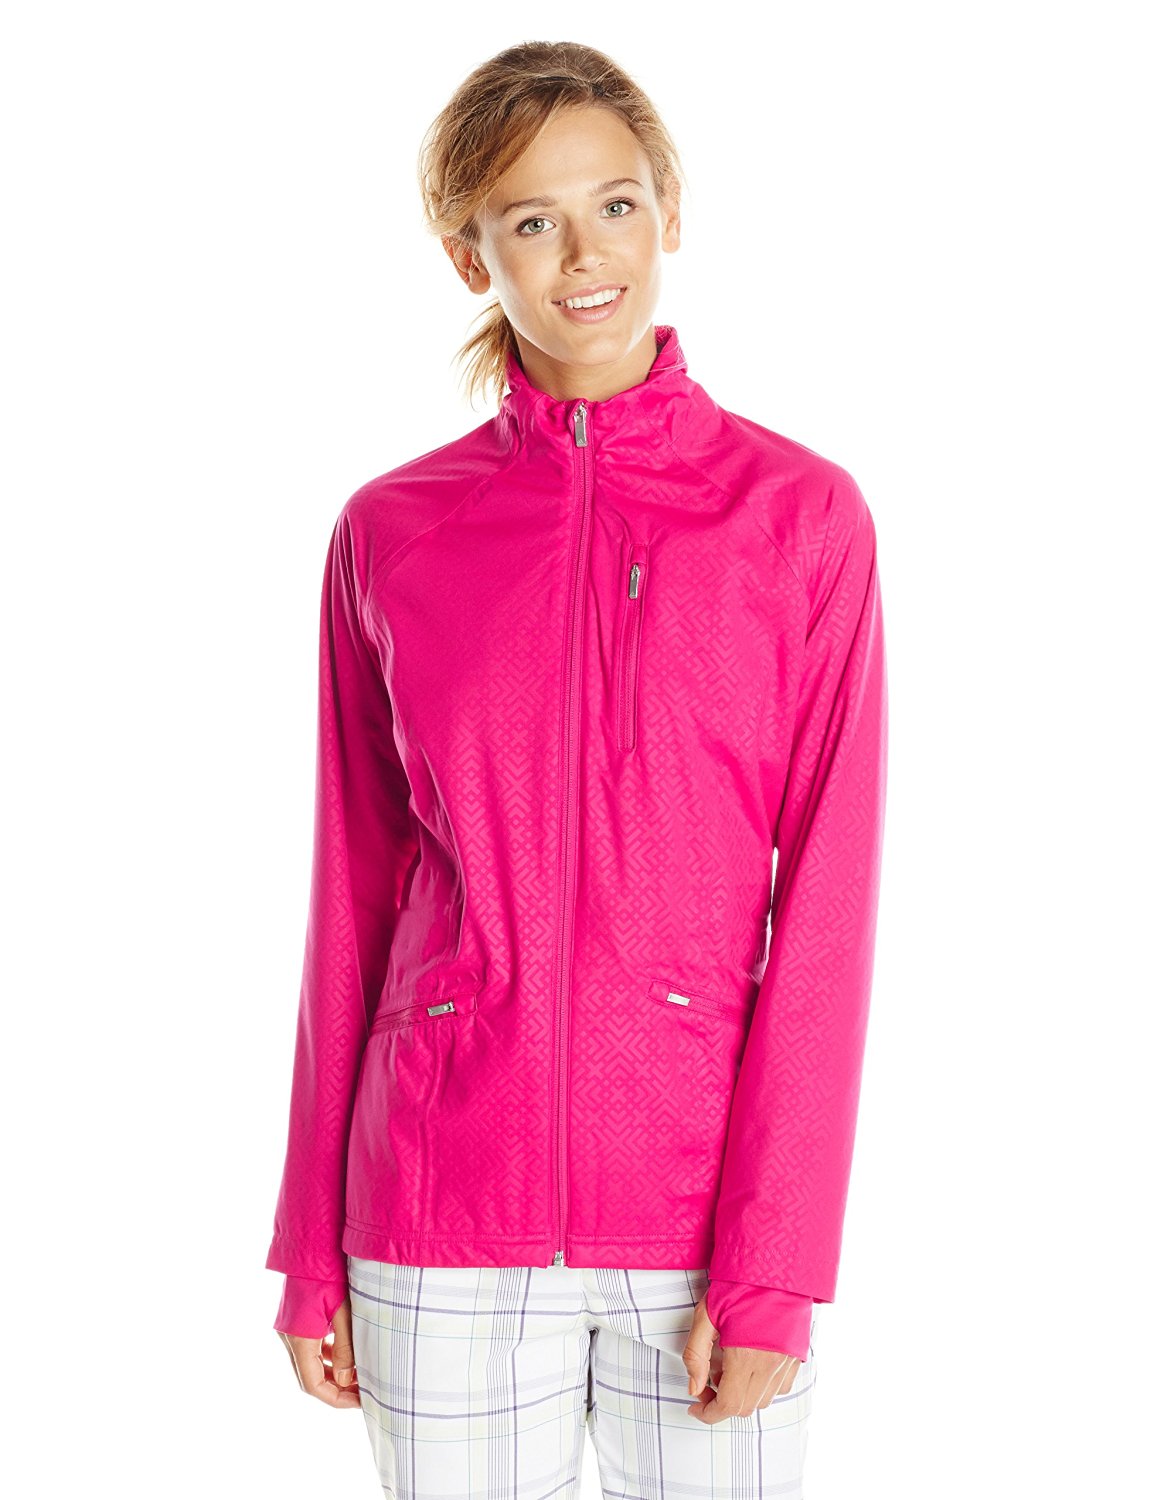 Adidas Womens Climaproof Fashion Golf Rain Jackets